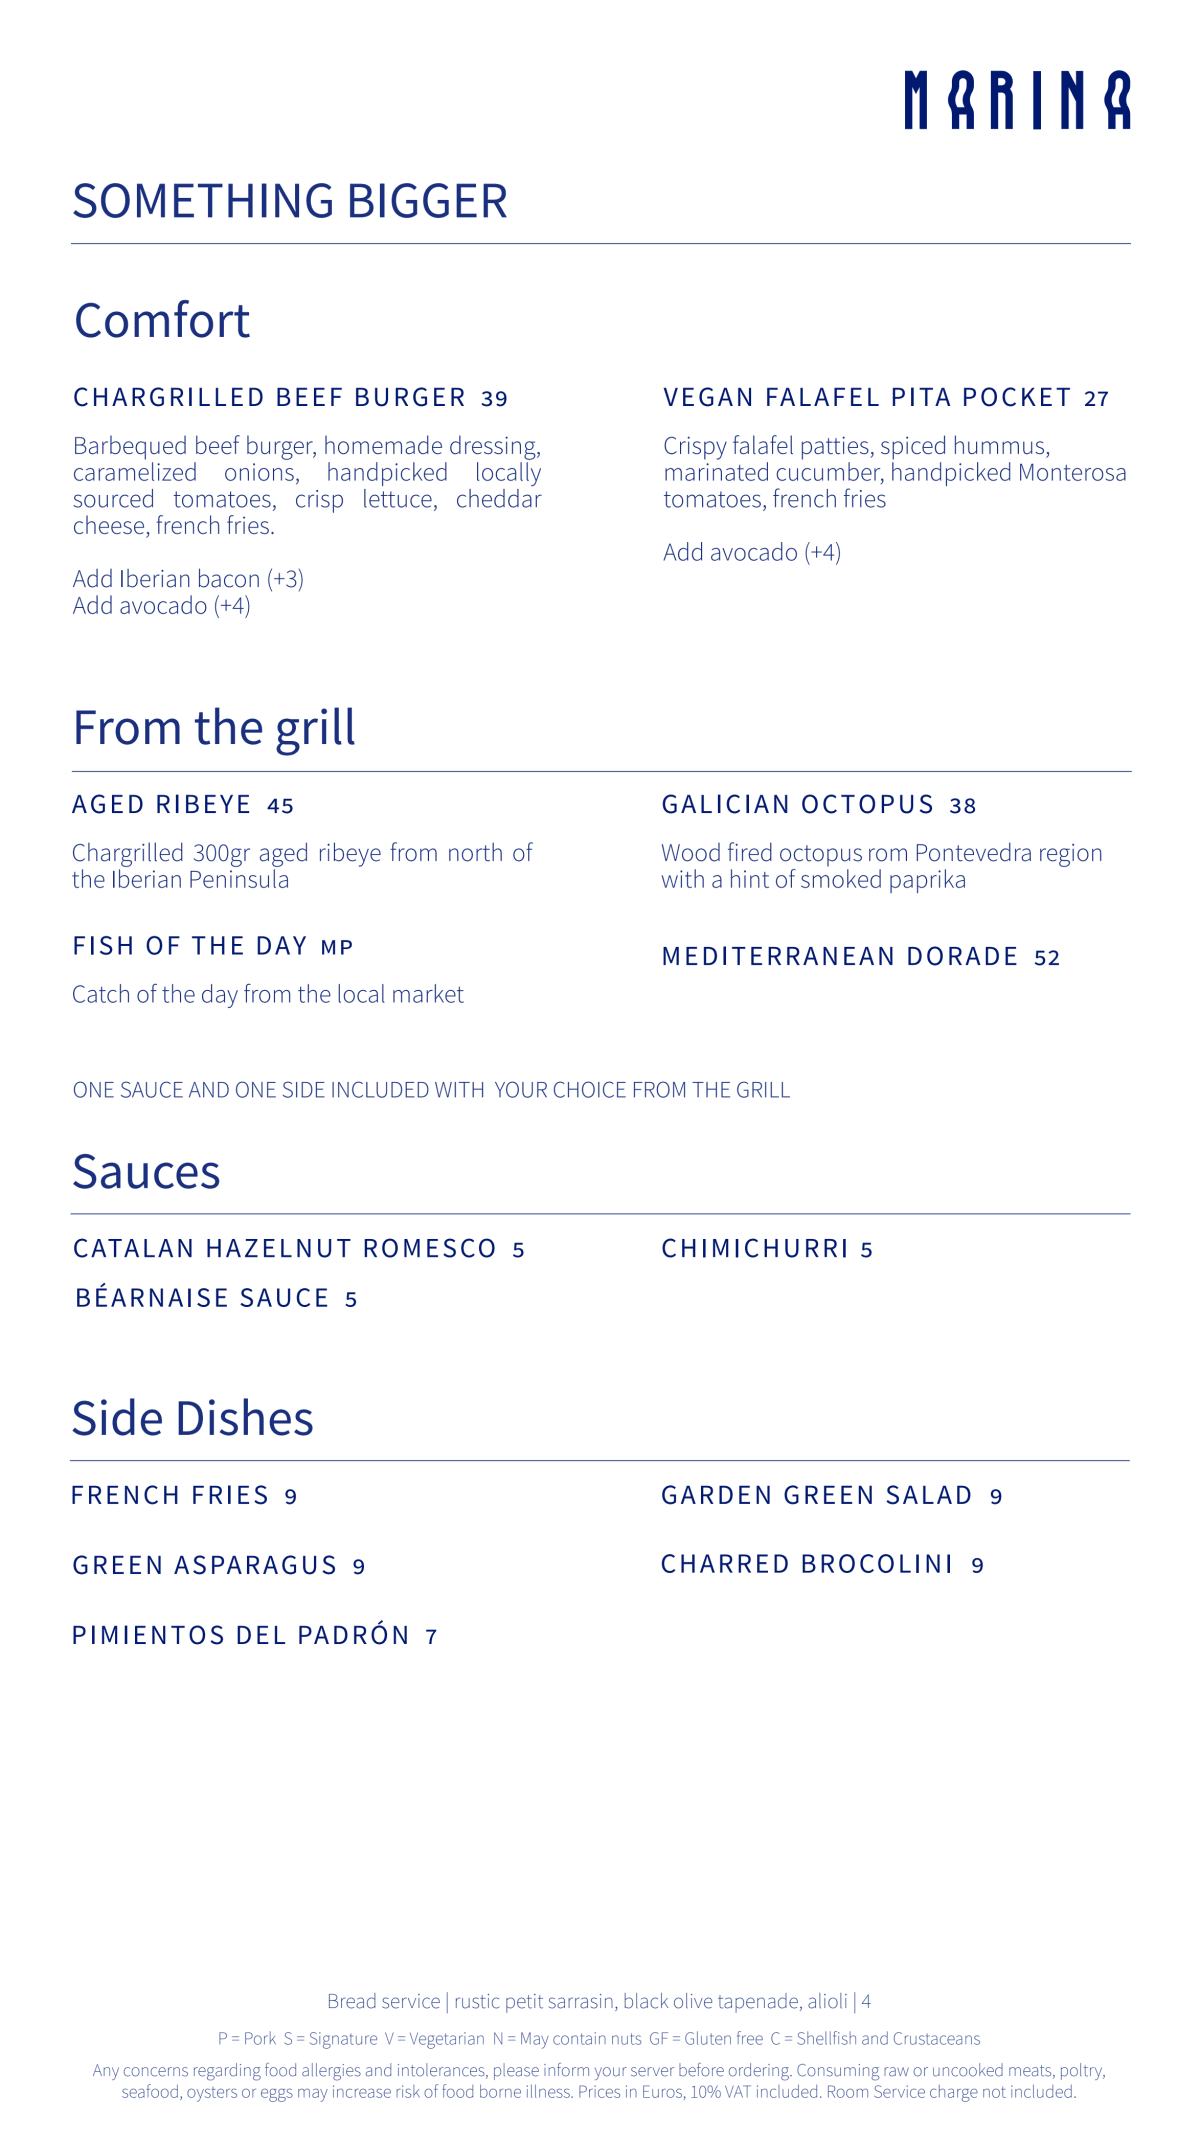 Marina - Hotel Arts Barcelona menu